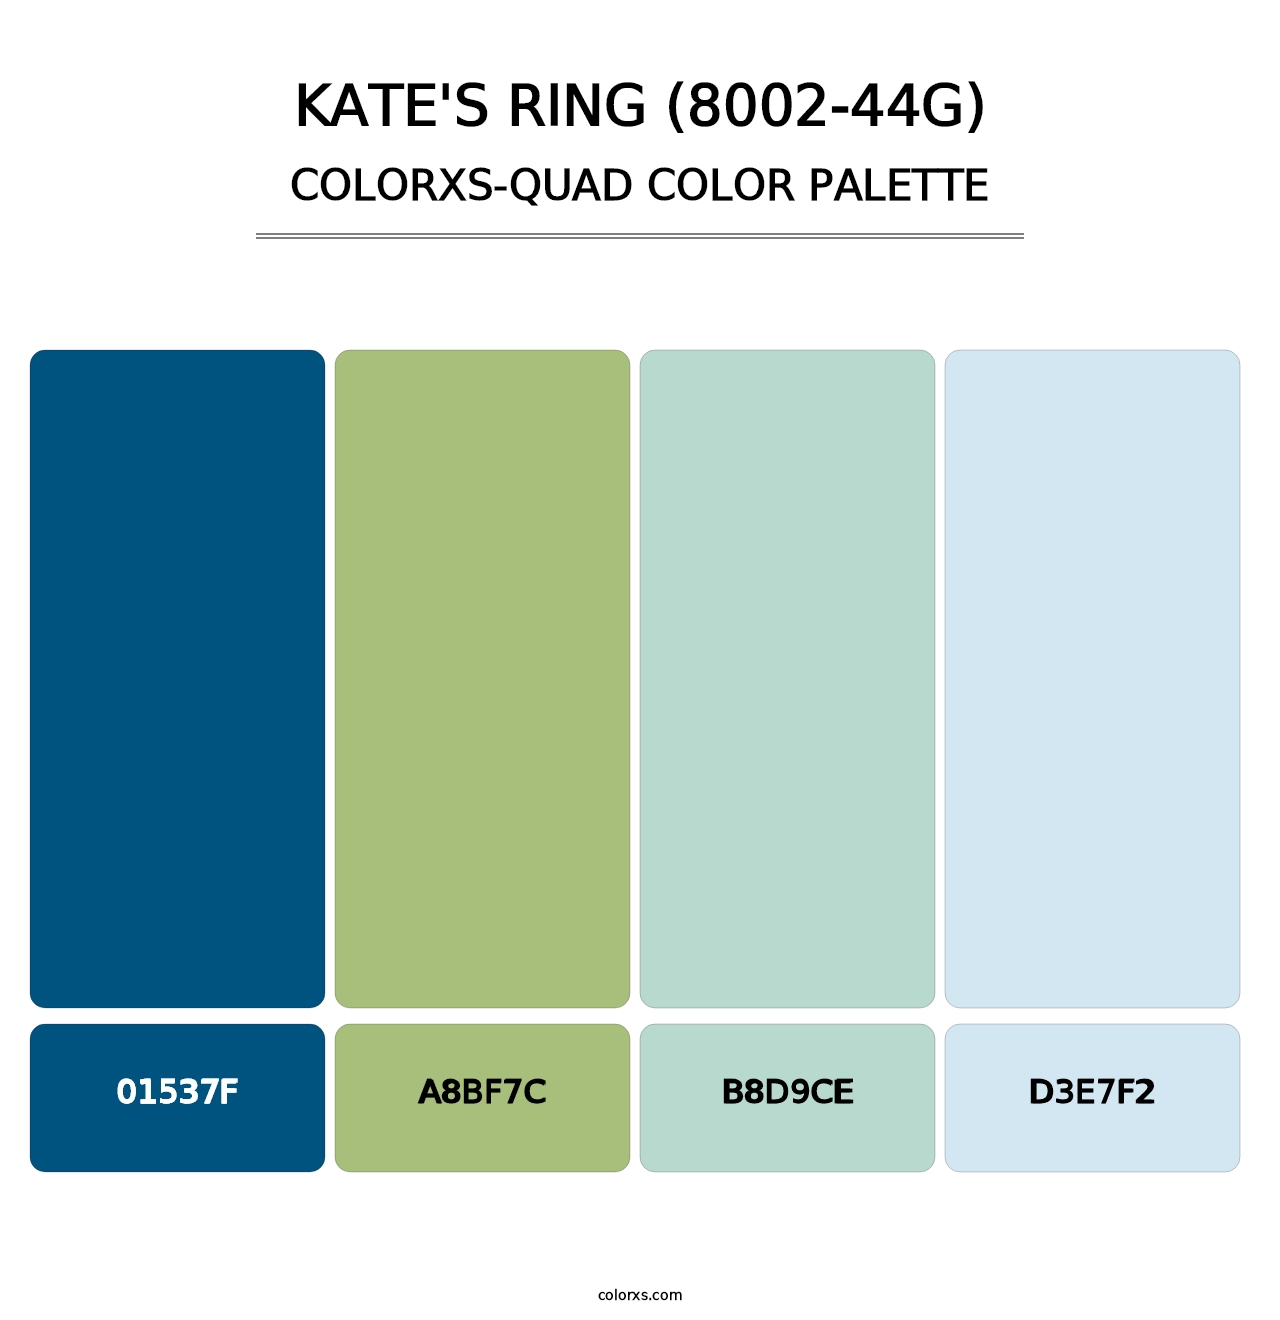 Kate's Ring (8002-44G) - Colorxs Quad Palette